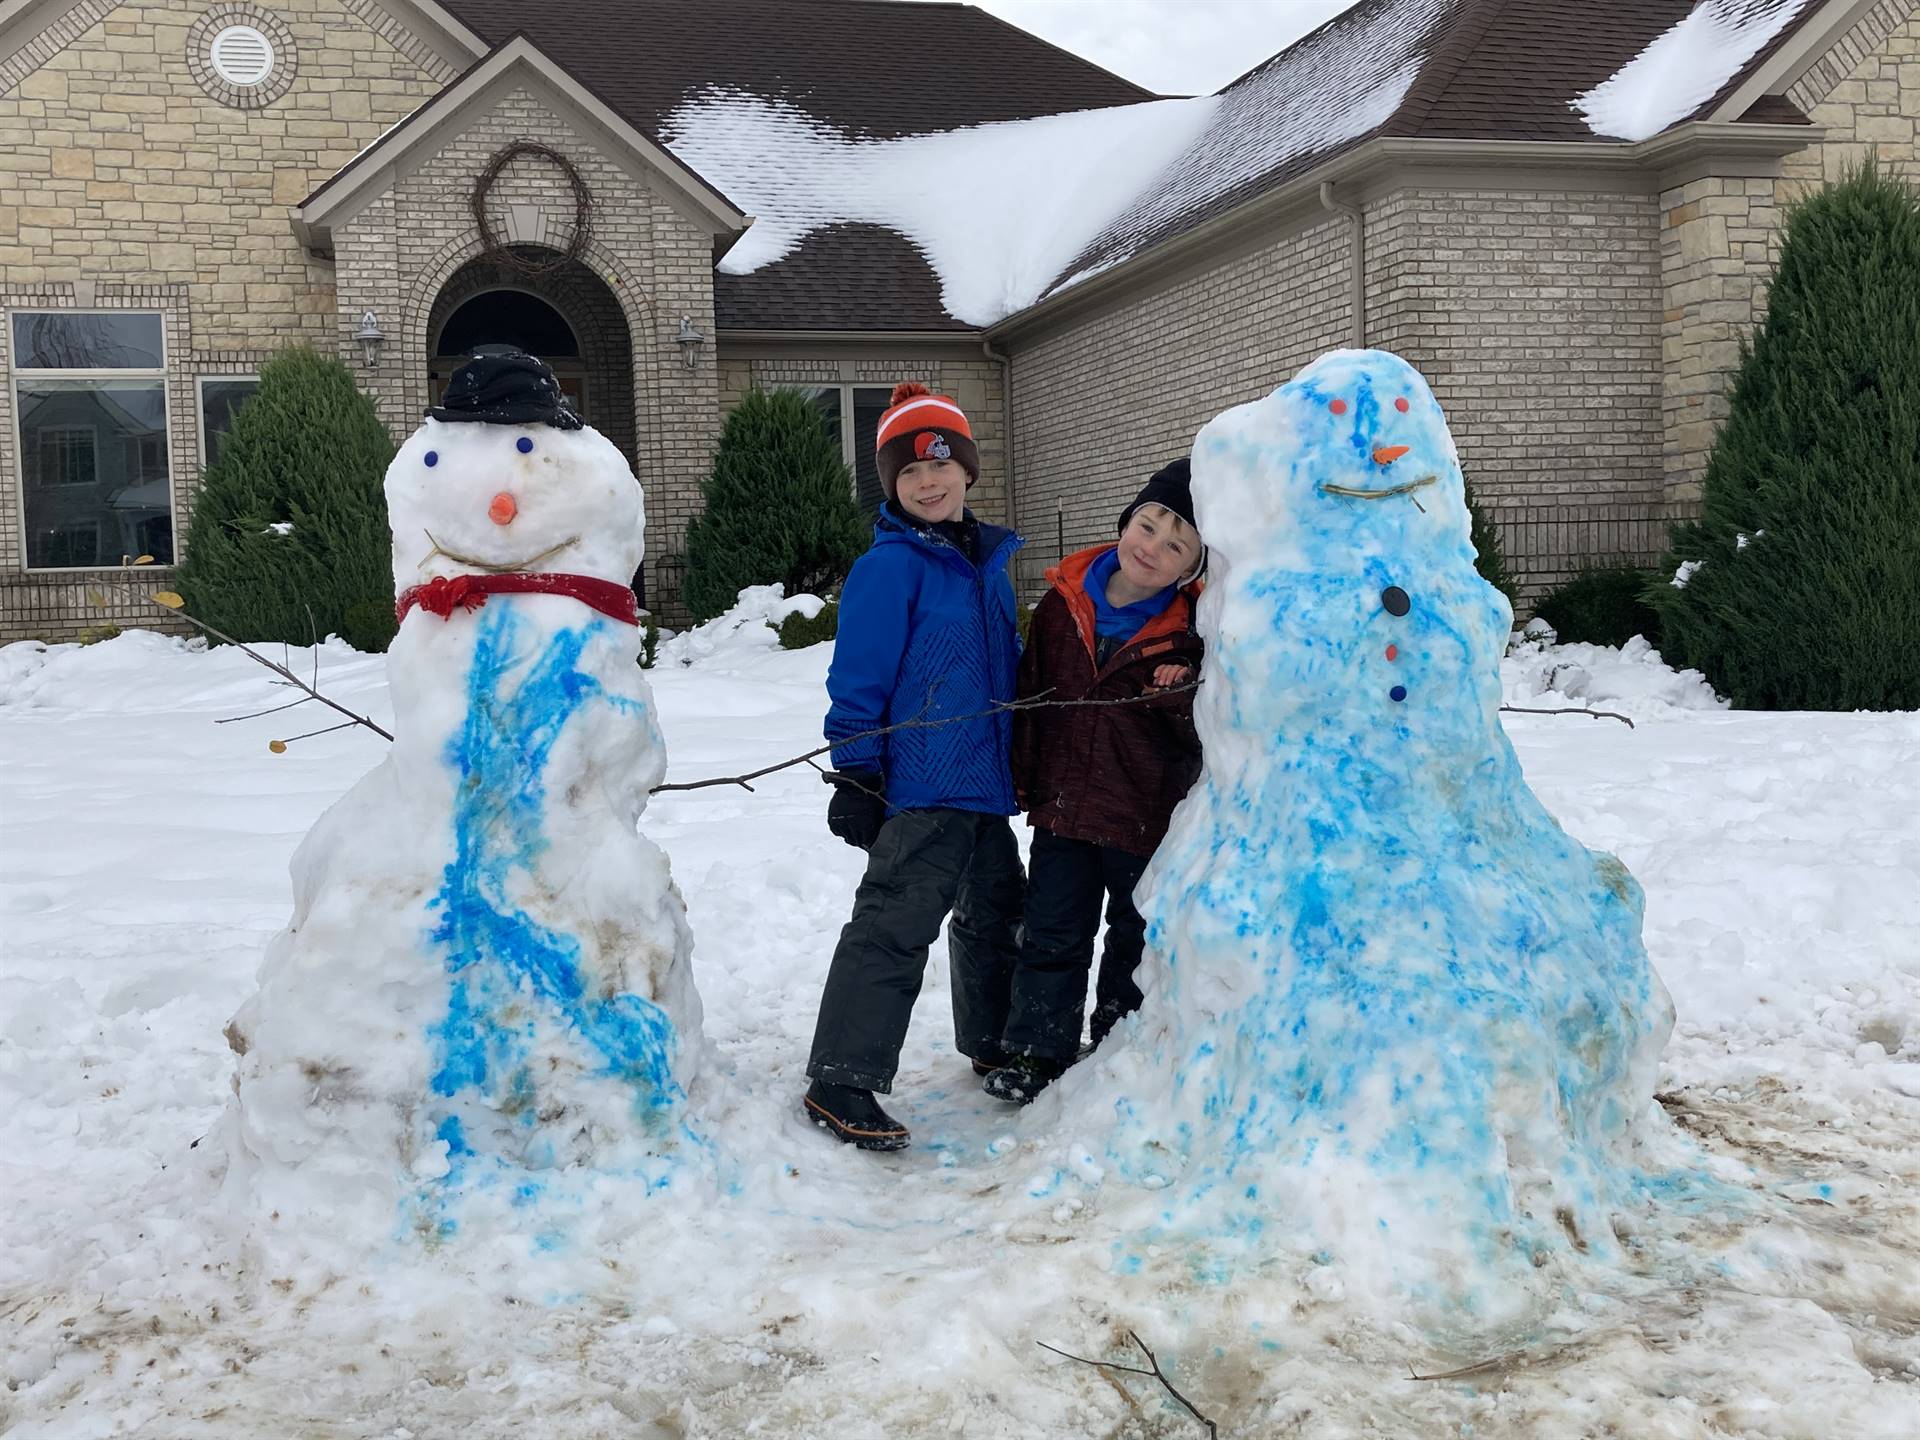 Snowman Building Contest Winner!